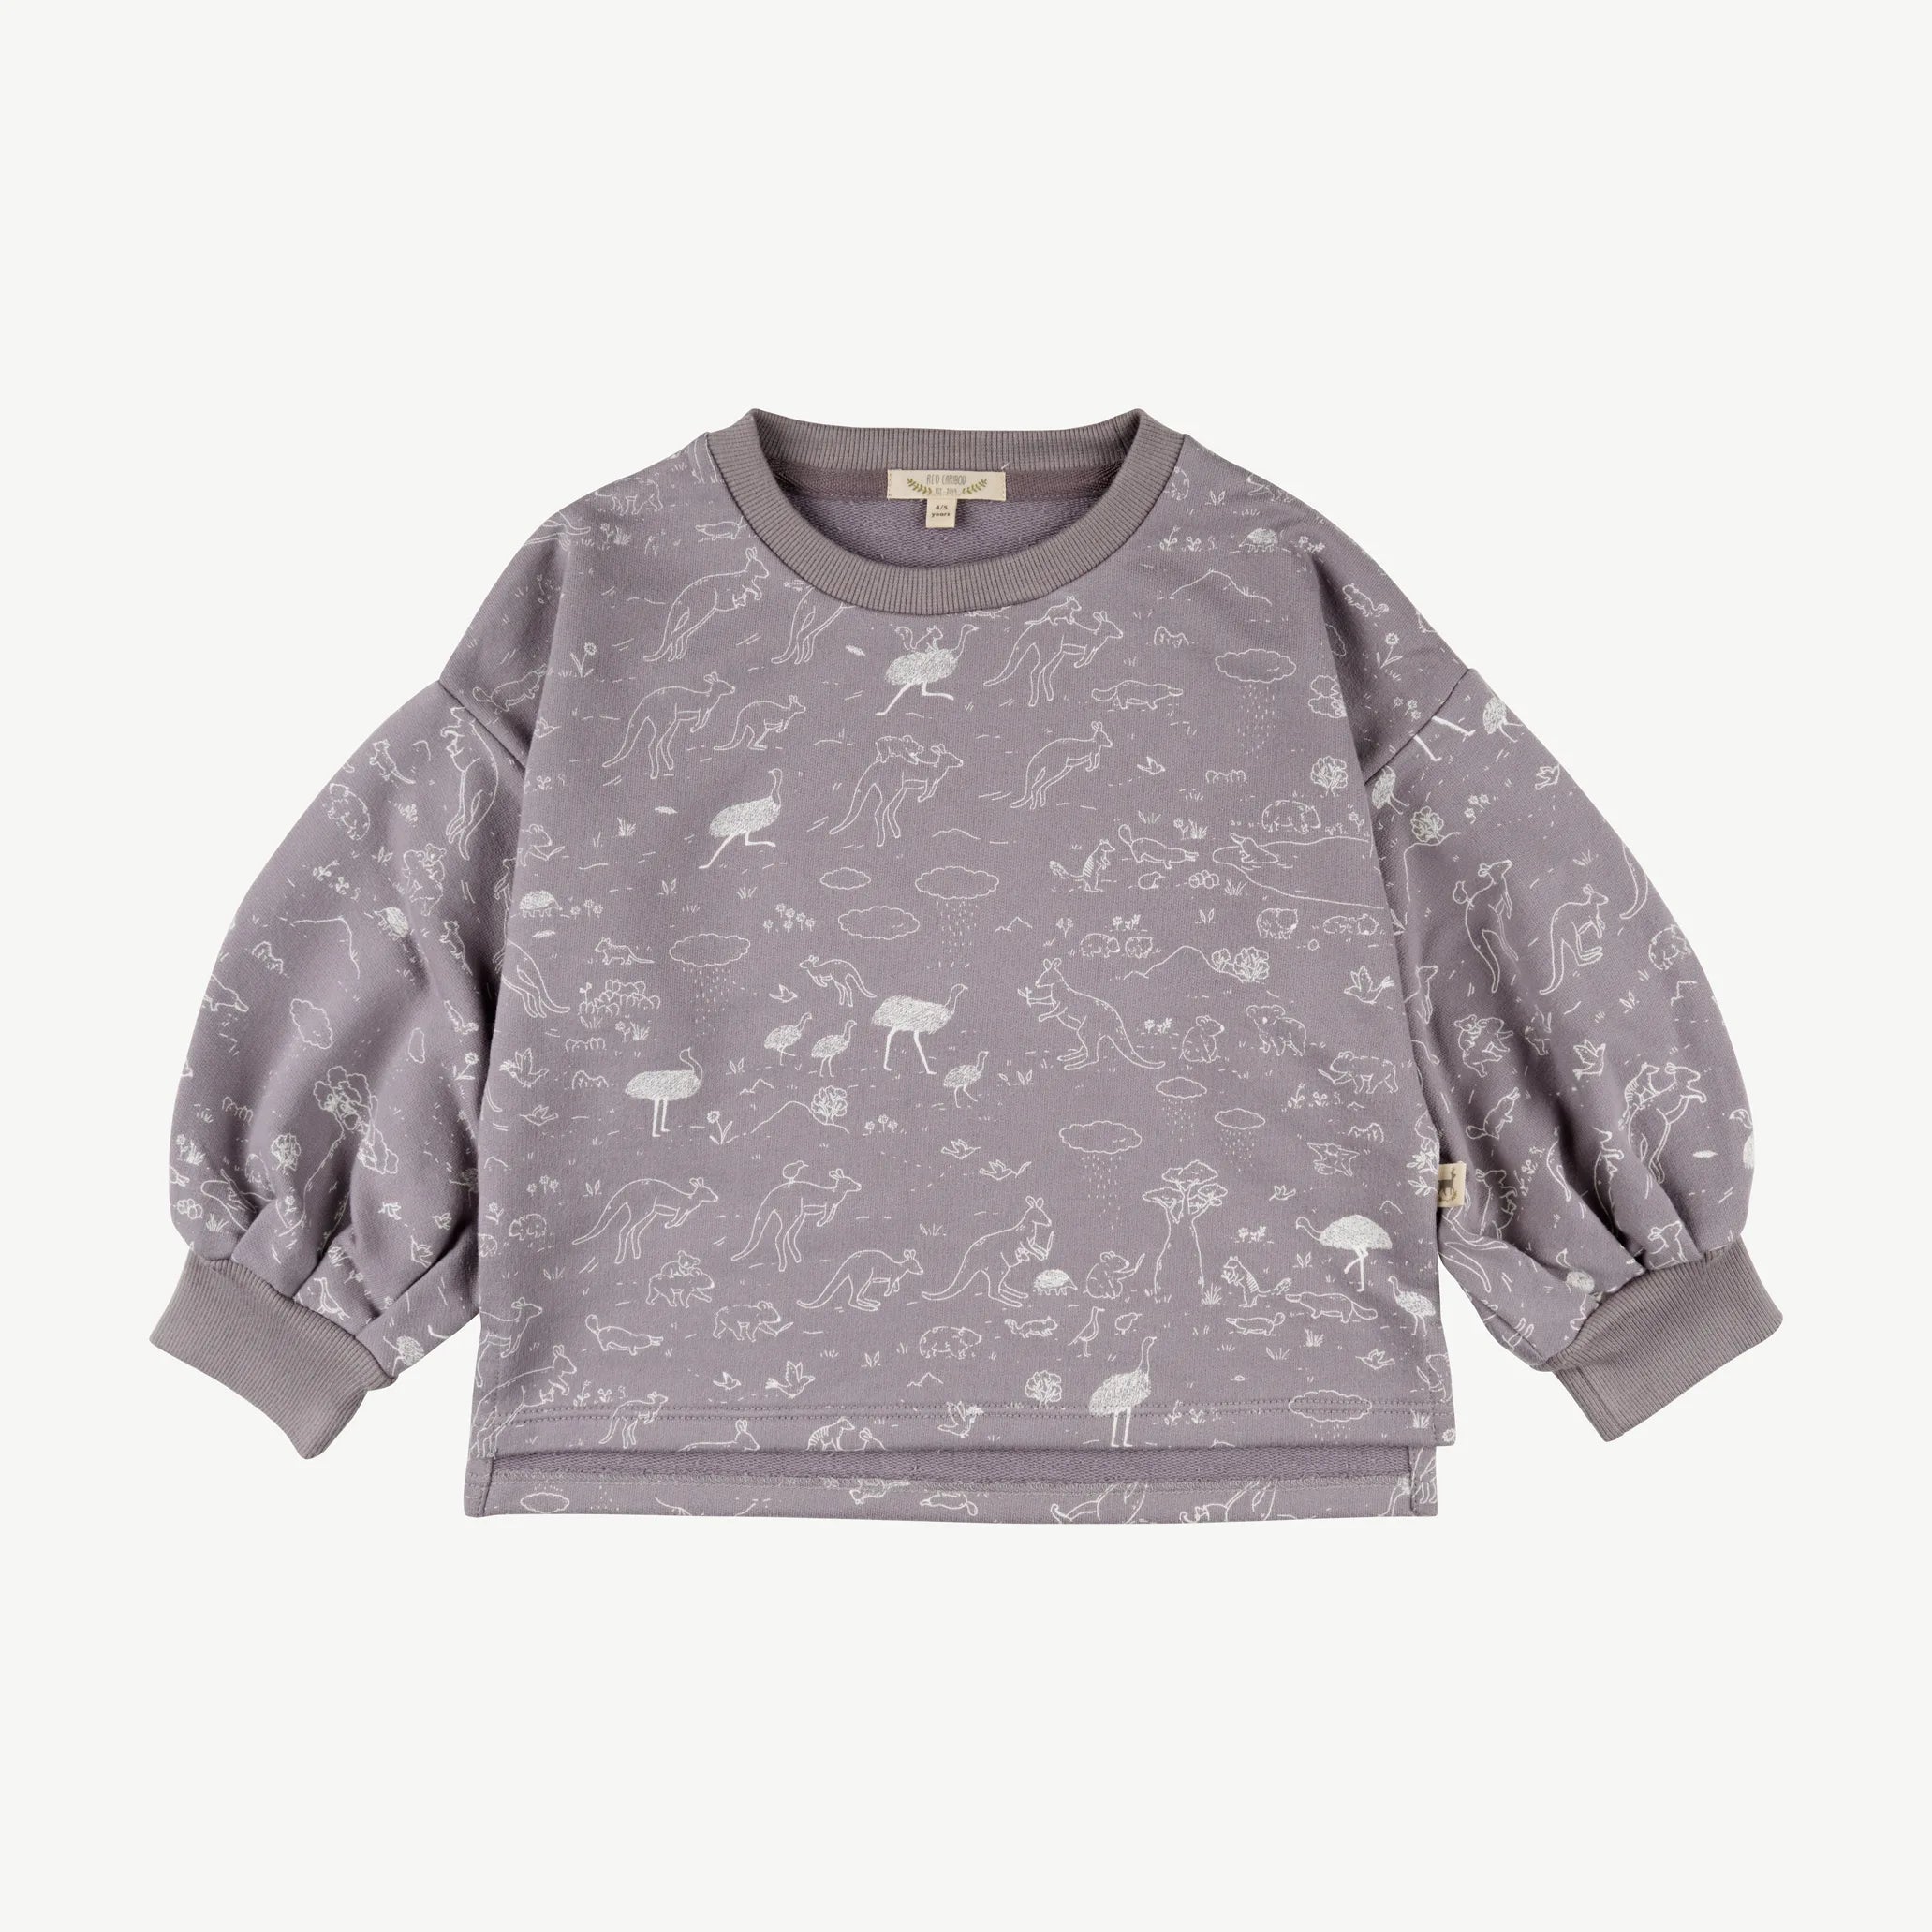 'the story' minimal gray puffed-sleeve sweatshirt